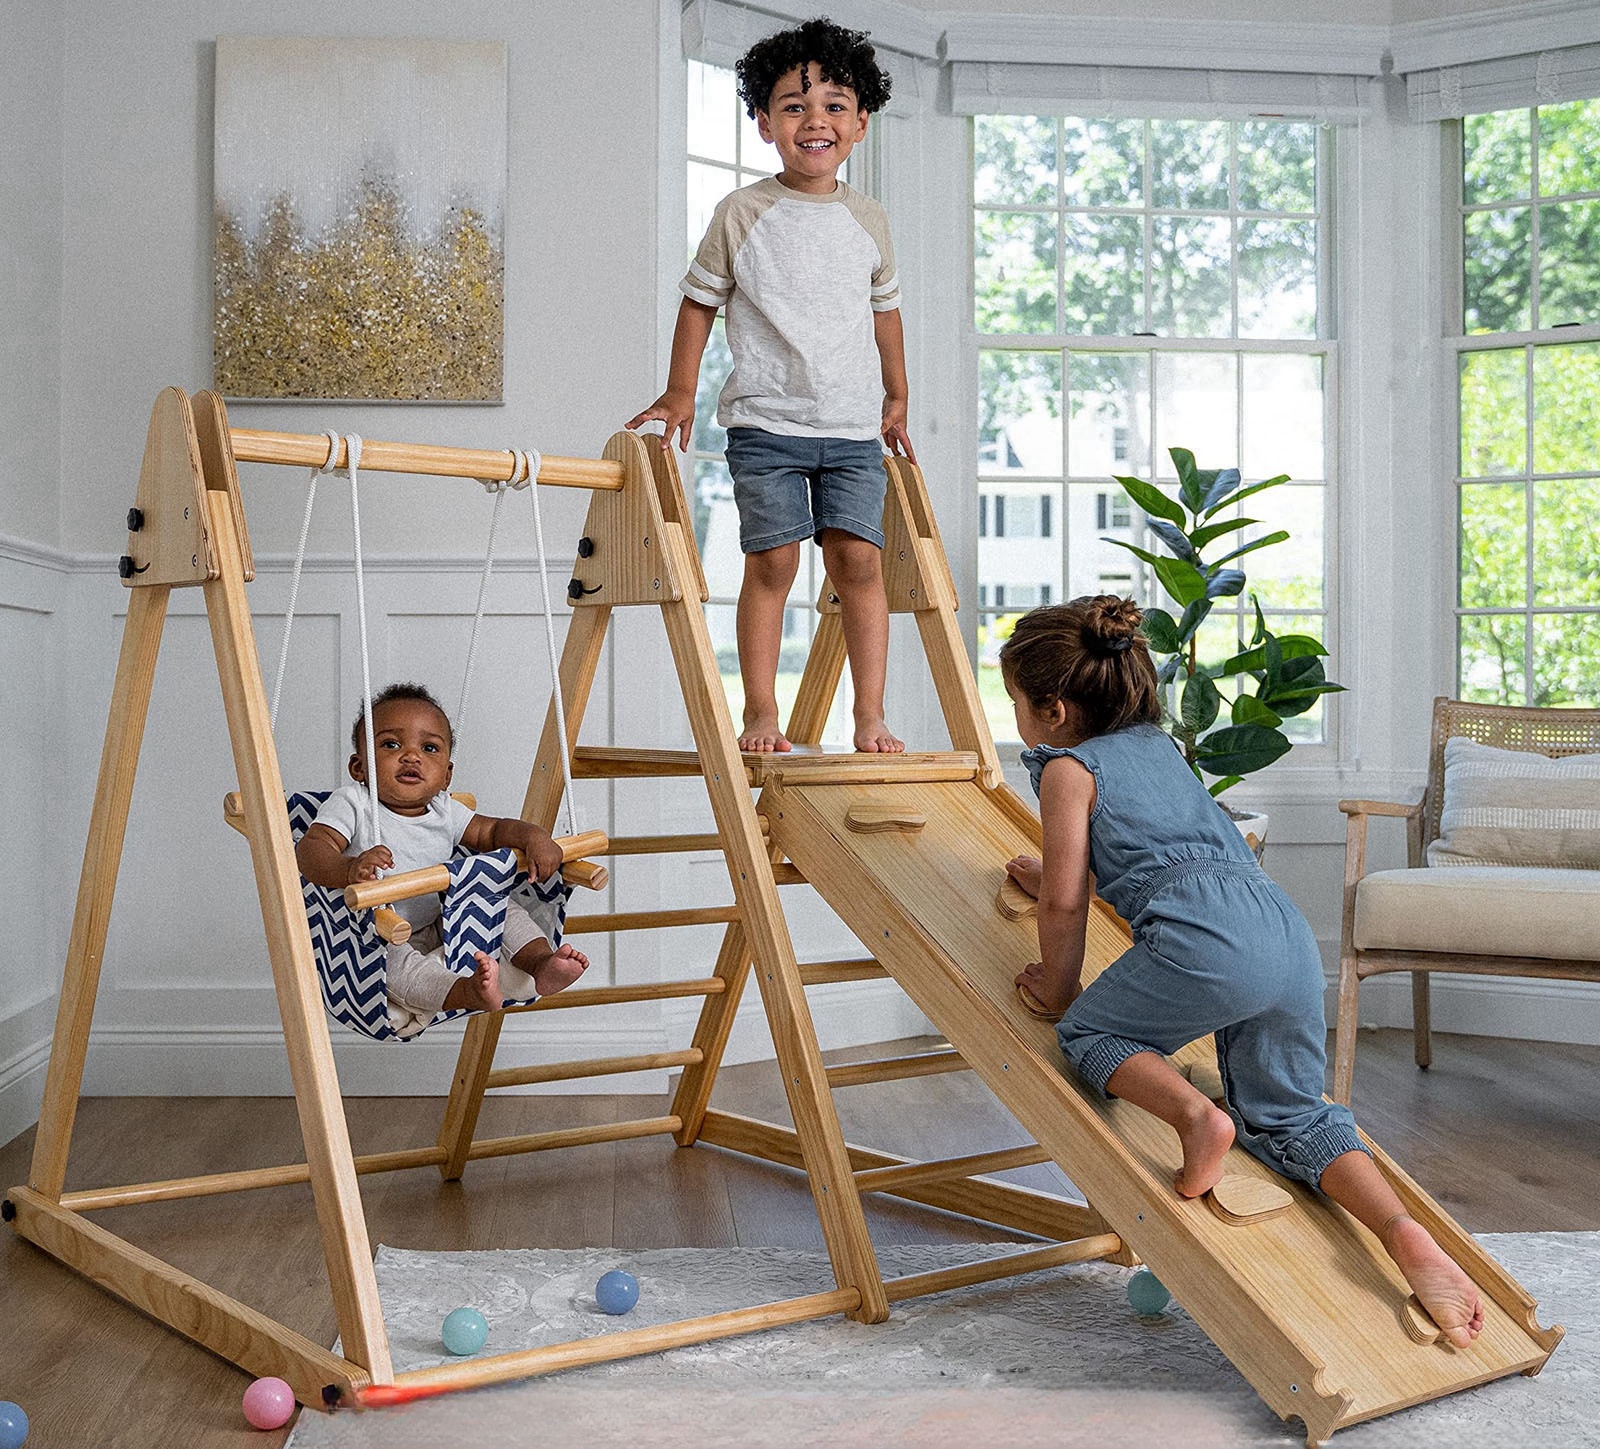 Foldable Montessori Climbing Set Indoor Playground for toddler climber